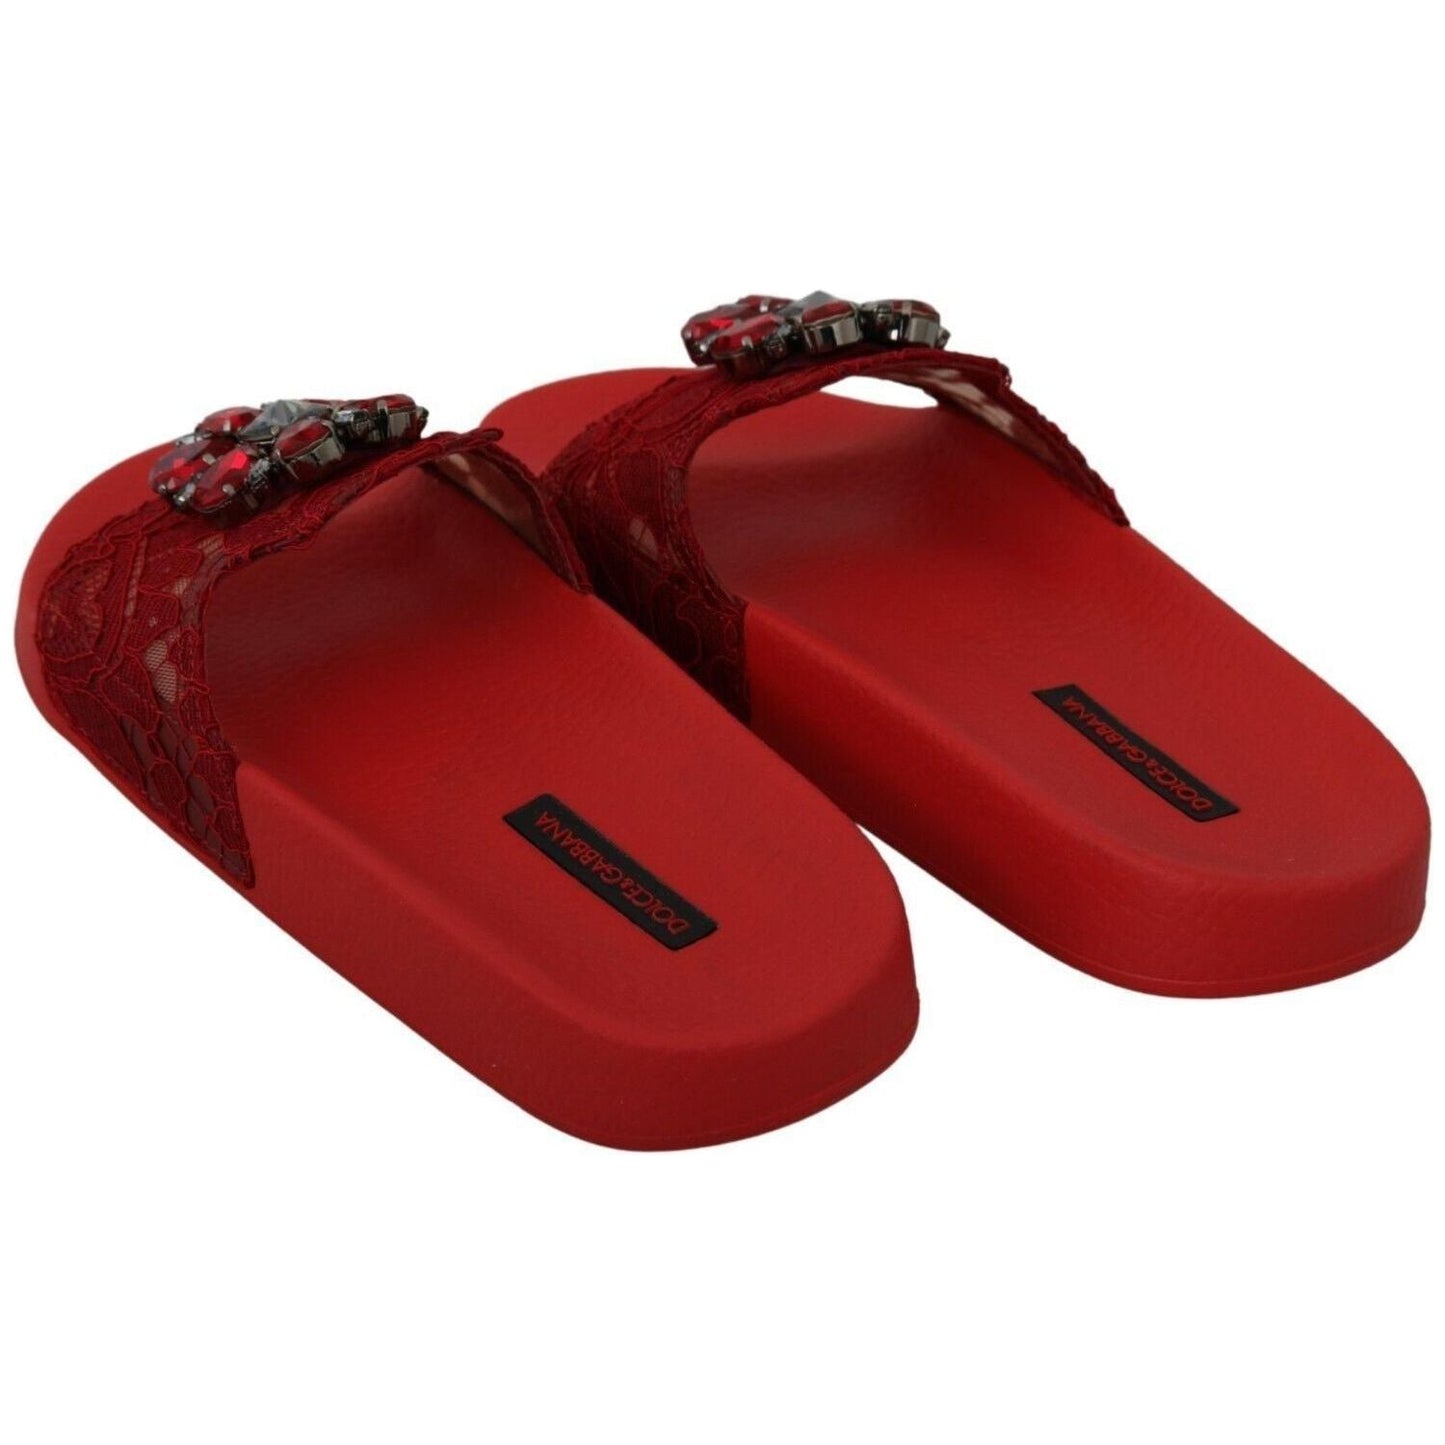 Dolce & Gabbana Floral Lace Crystal-Embellished Slide Flats red-lace-crystal-sandals-slides-beach-shoes